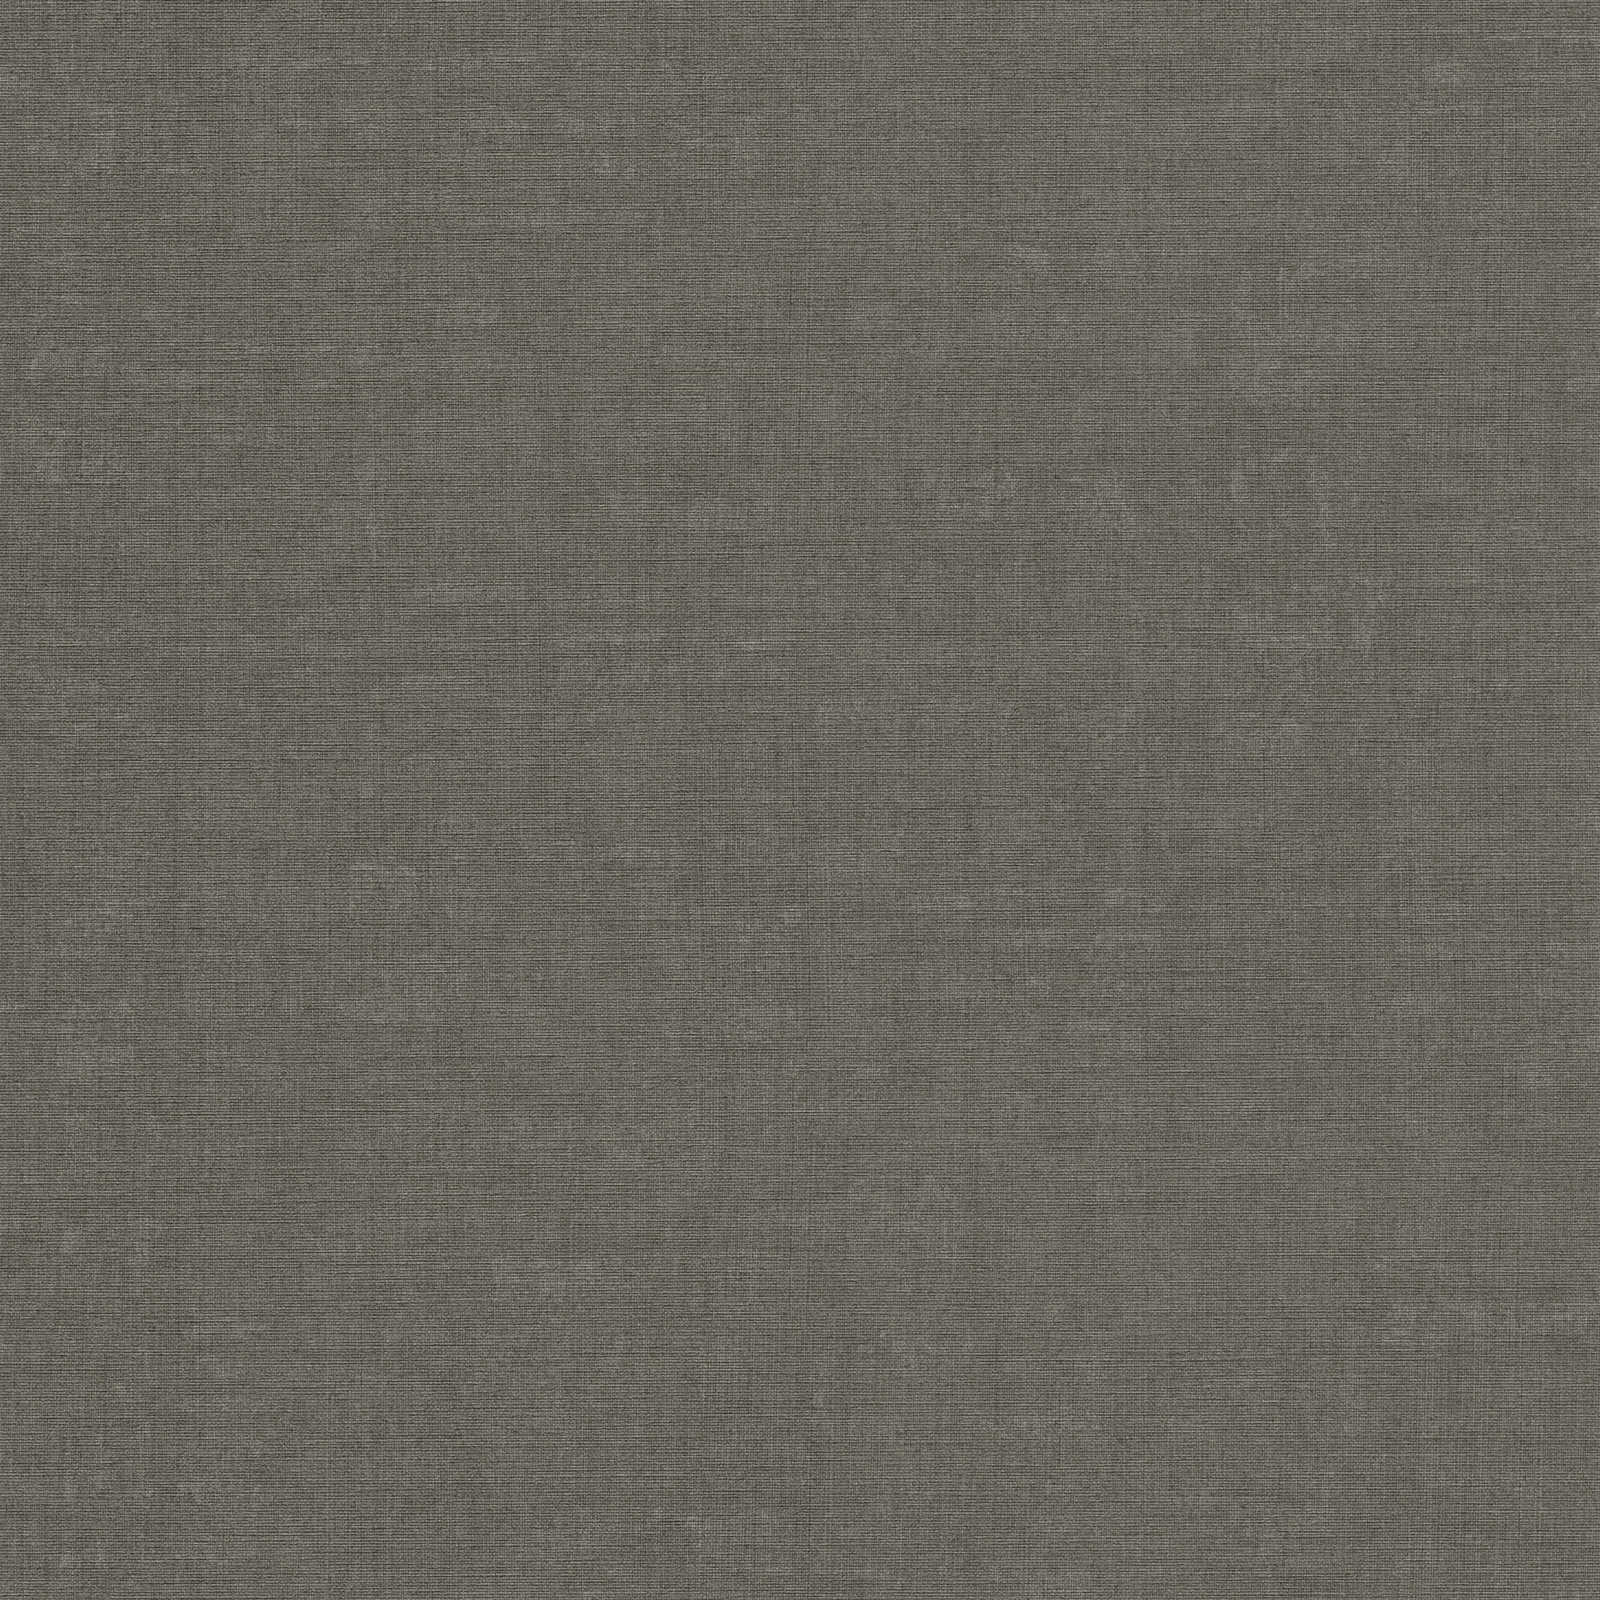 Nara - Mottled Plain plain wallpaper AS Creation Roll Dark Grey  387454